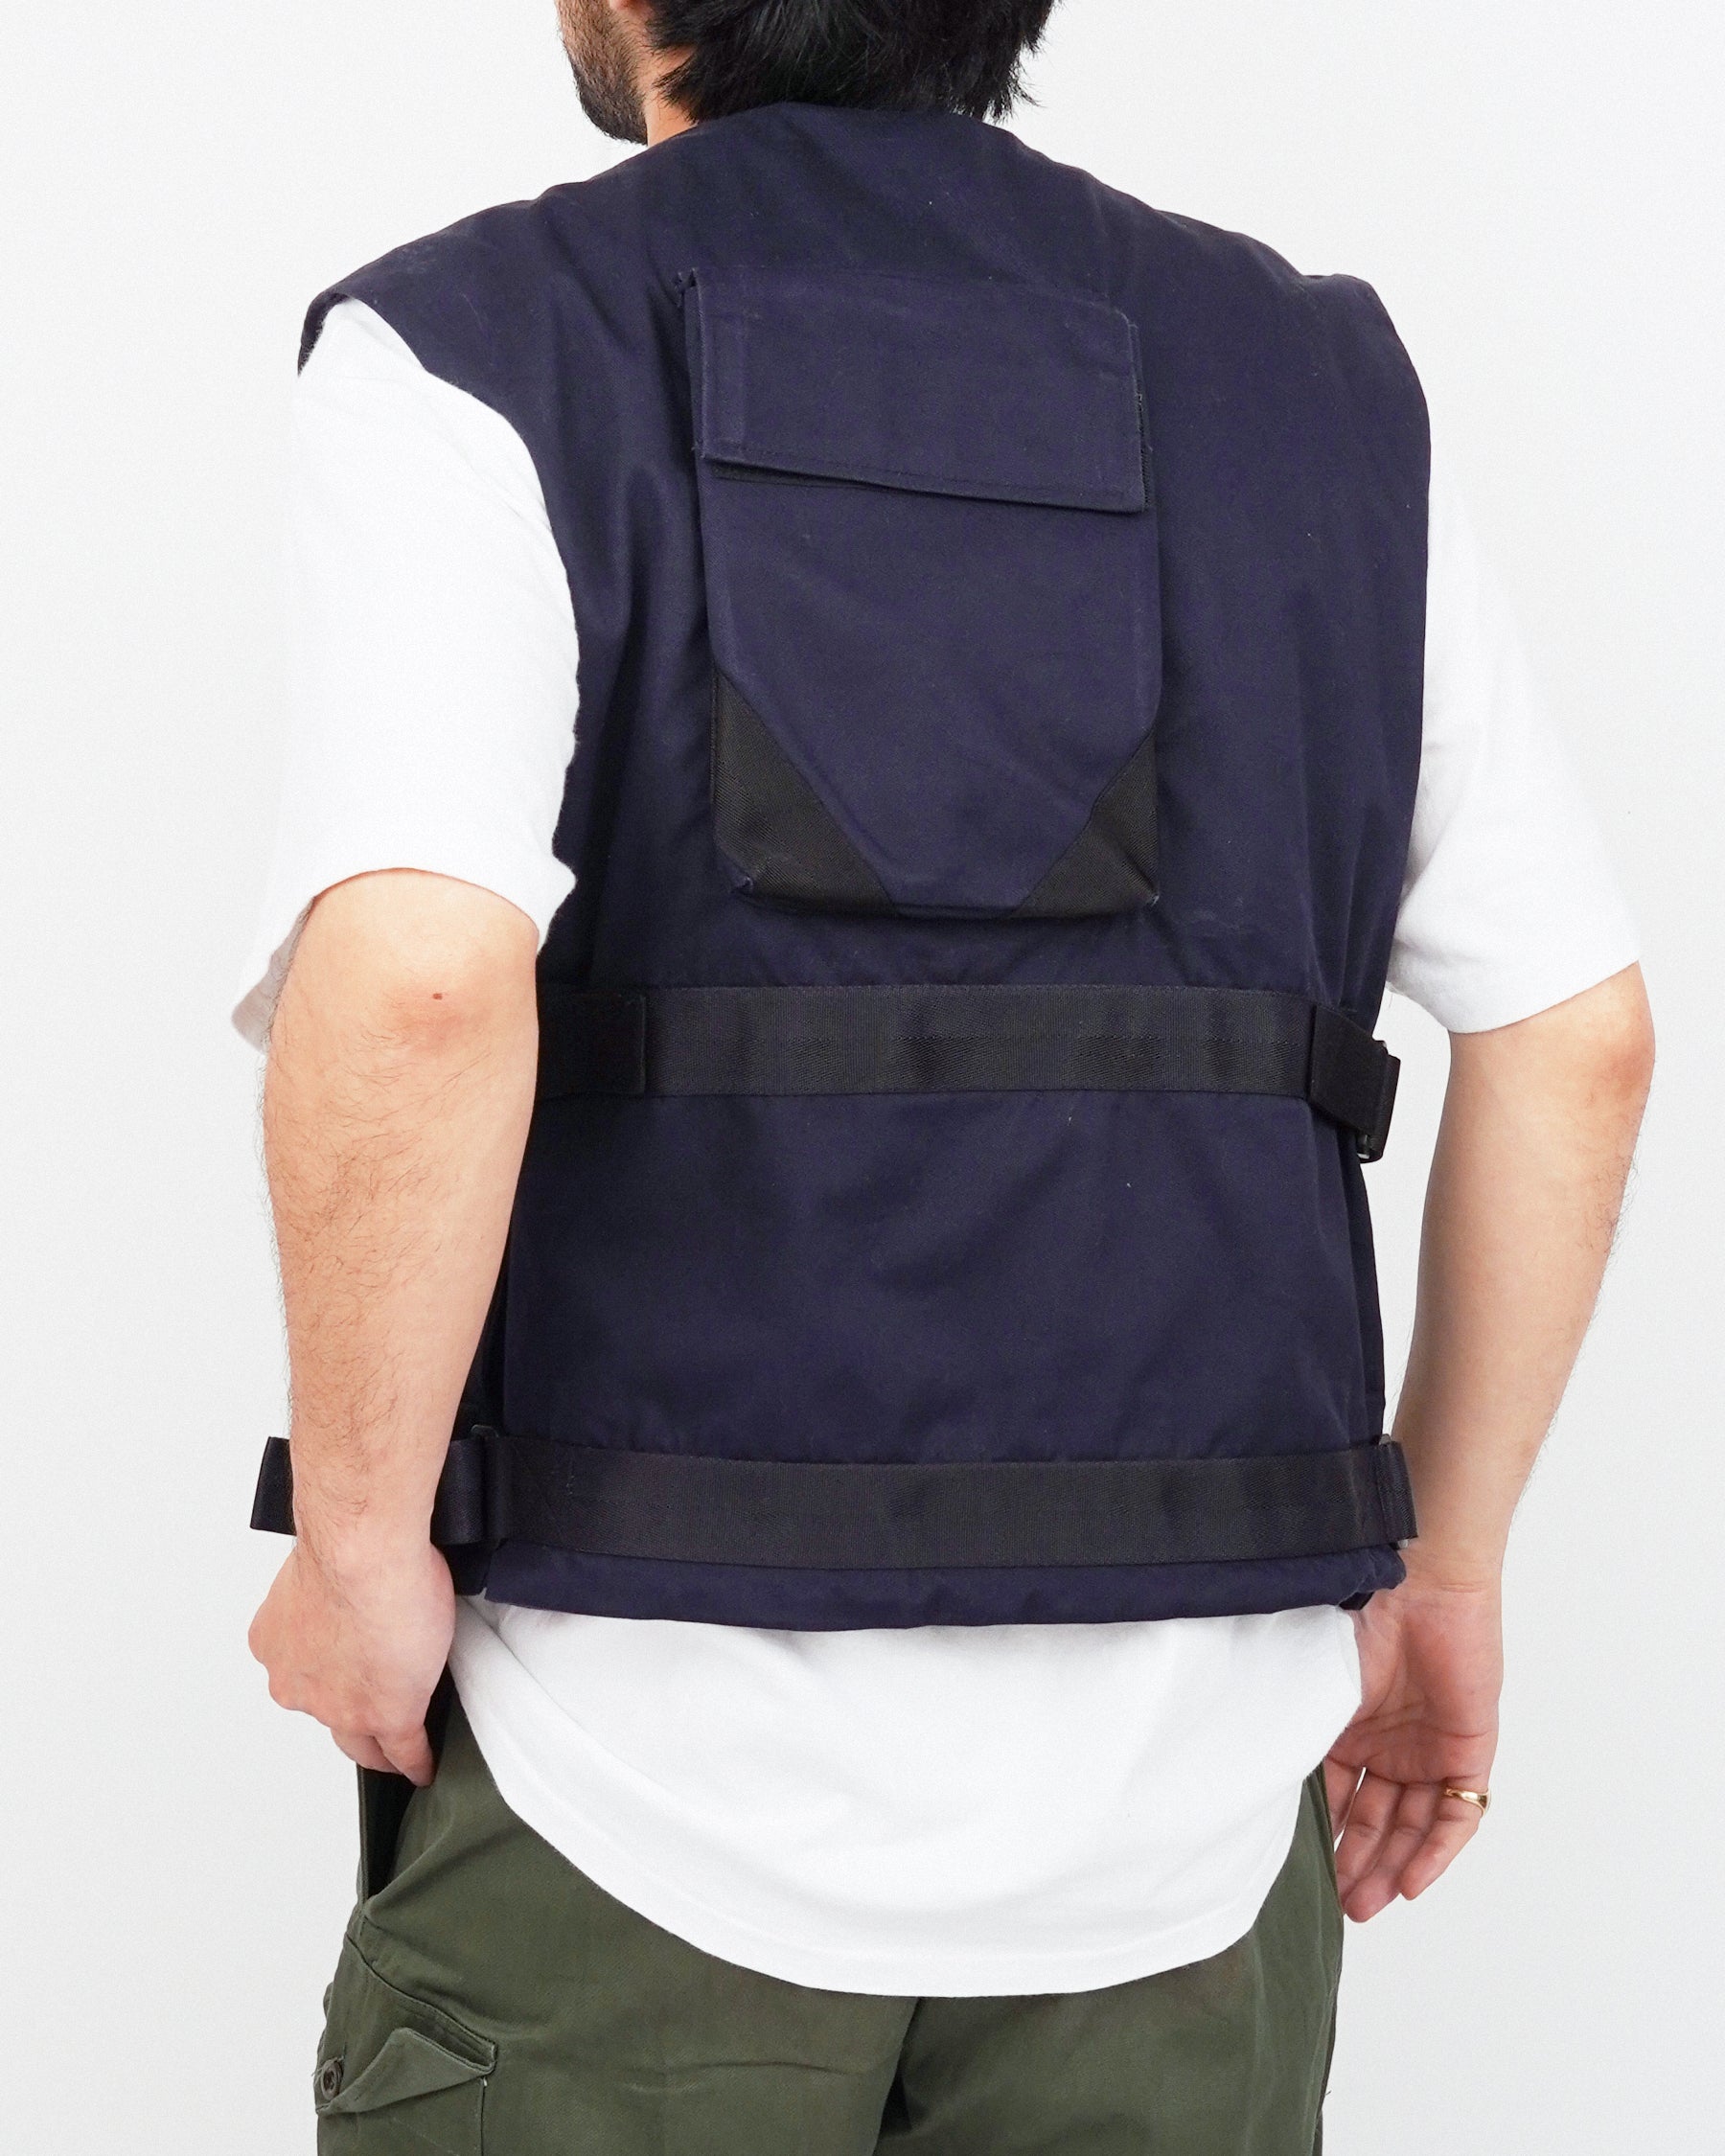 British Military Body Armor Vest